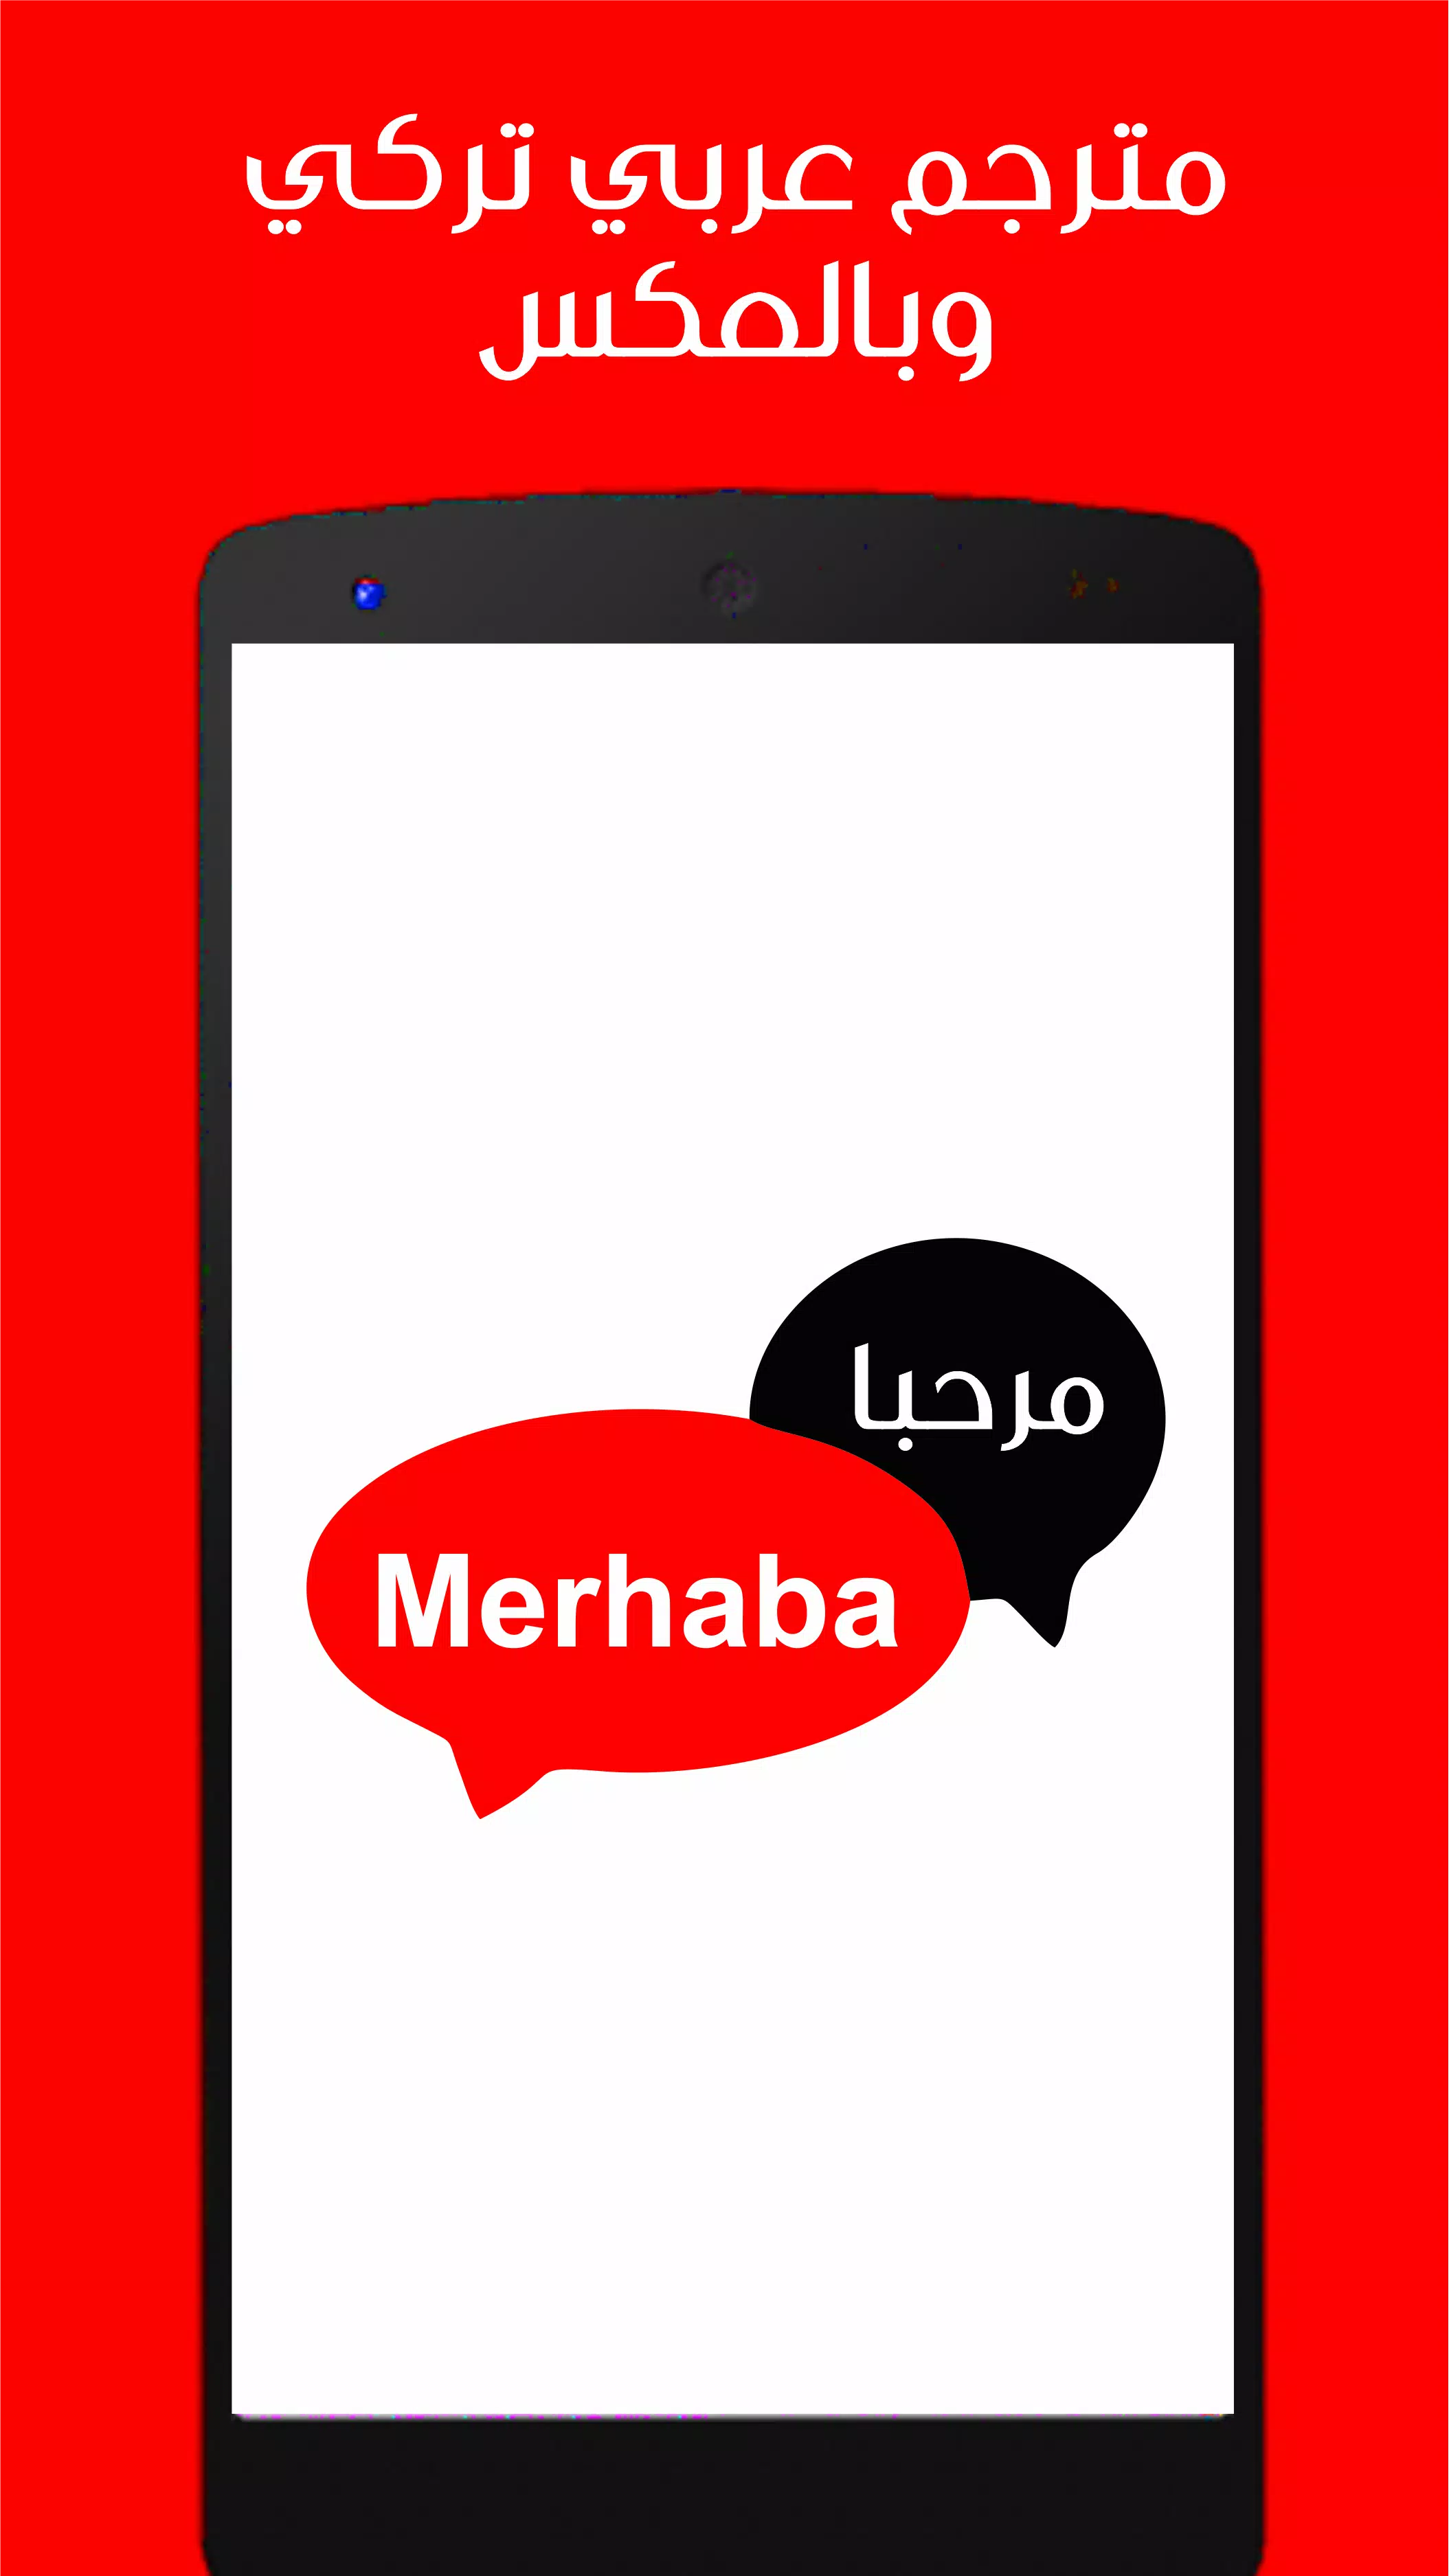 مترجم عربي تركي ناطق وبالعكس APK untuk Unduhan Android